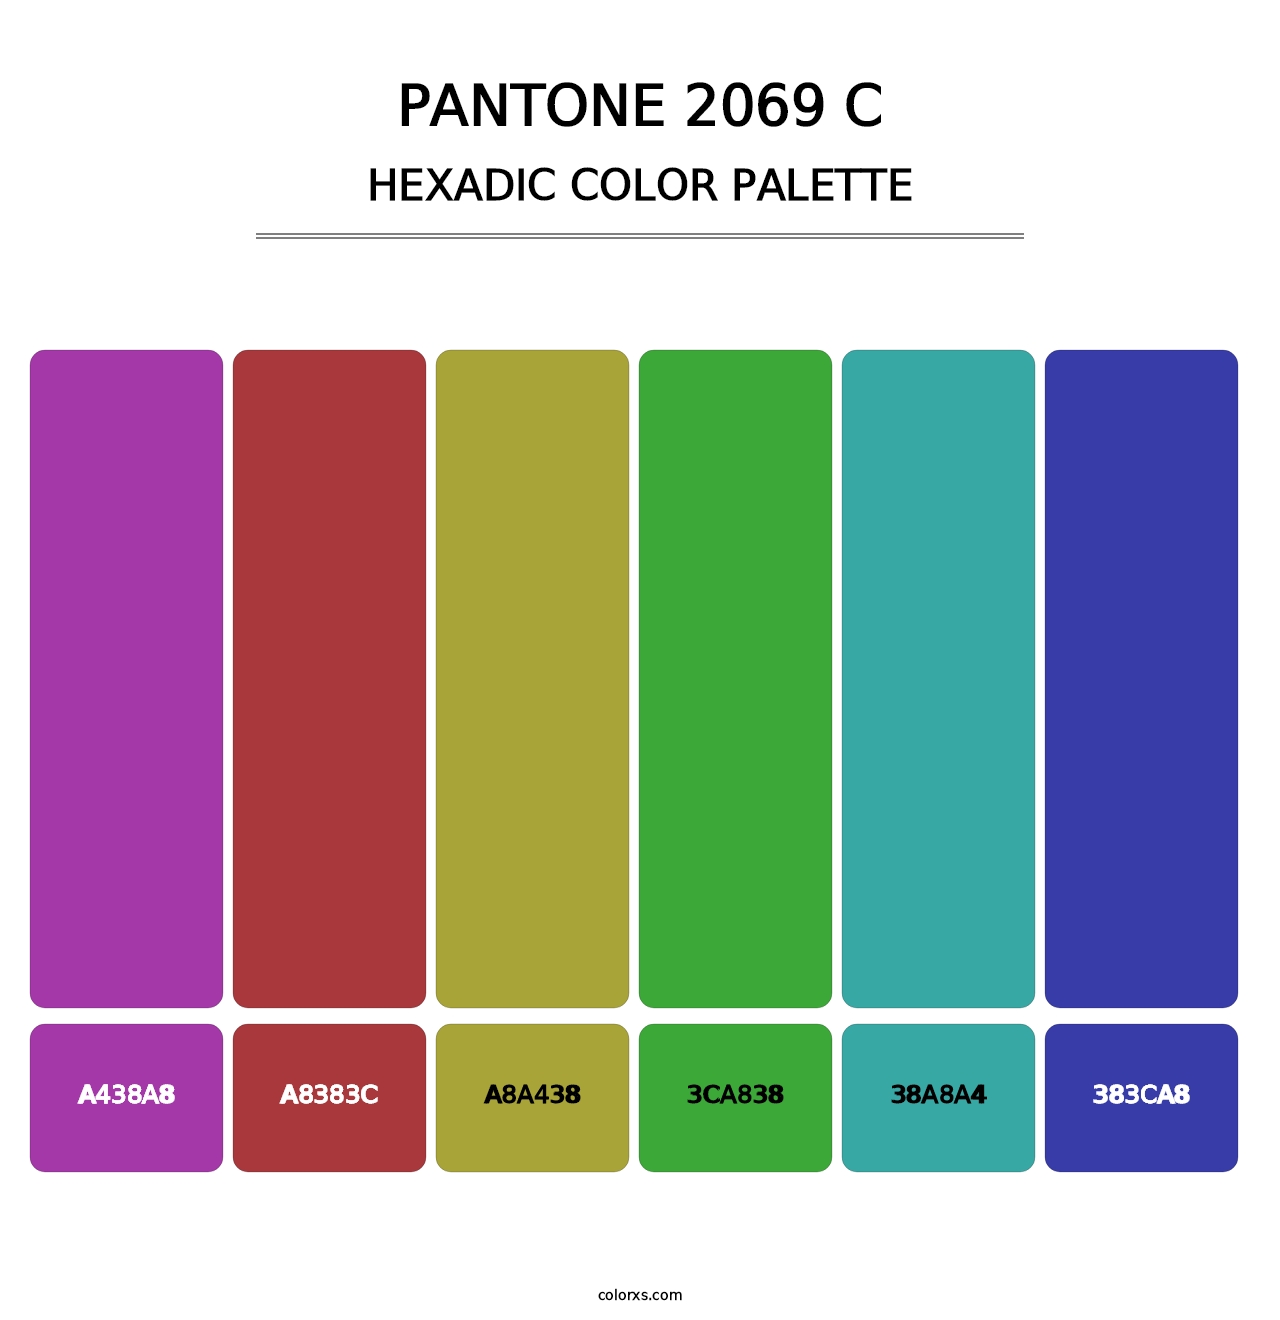 PANTONE 2069 C - Hexadic Color Palette